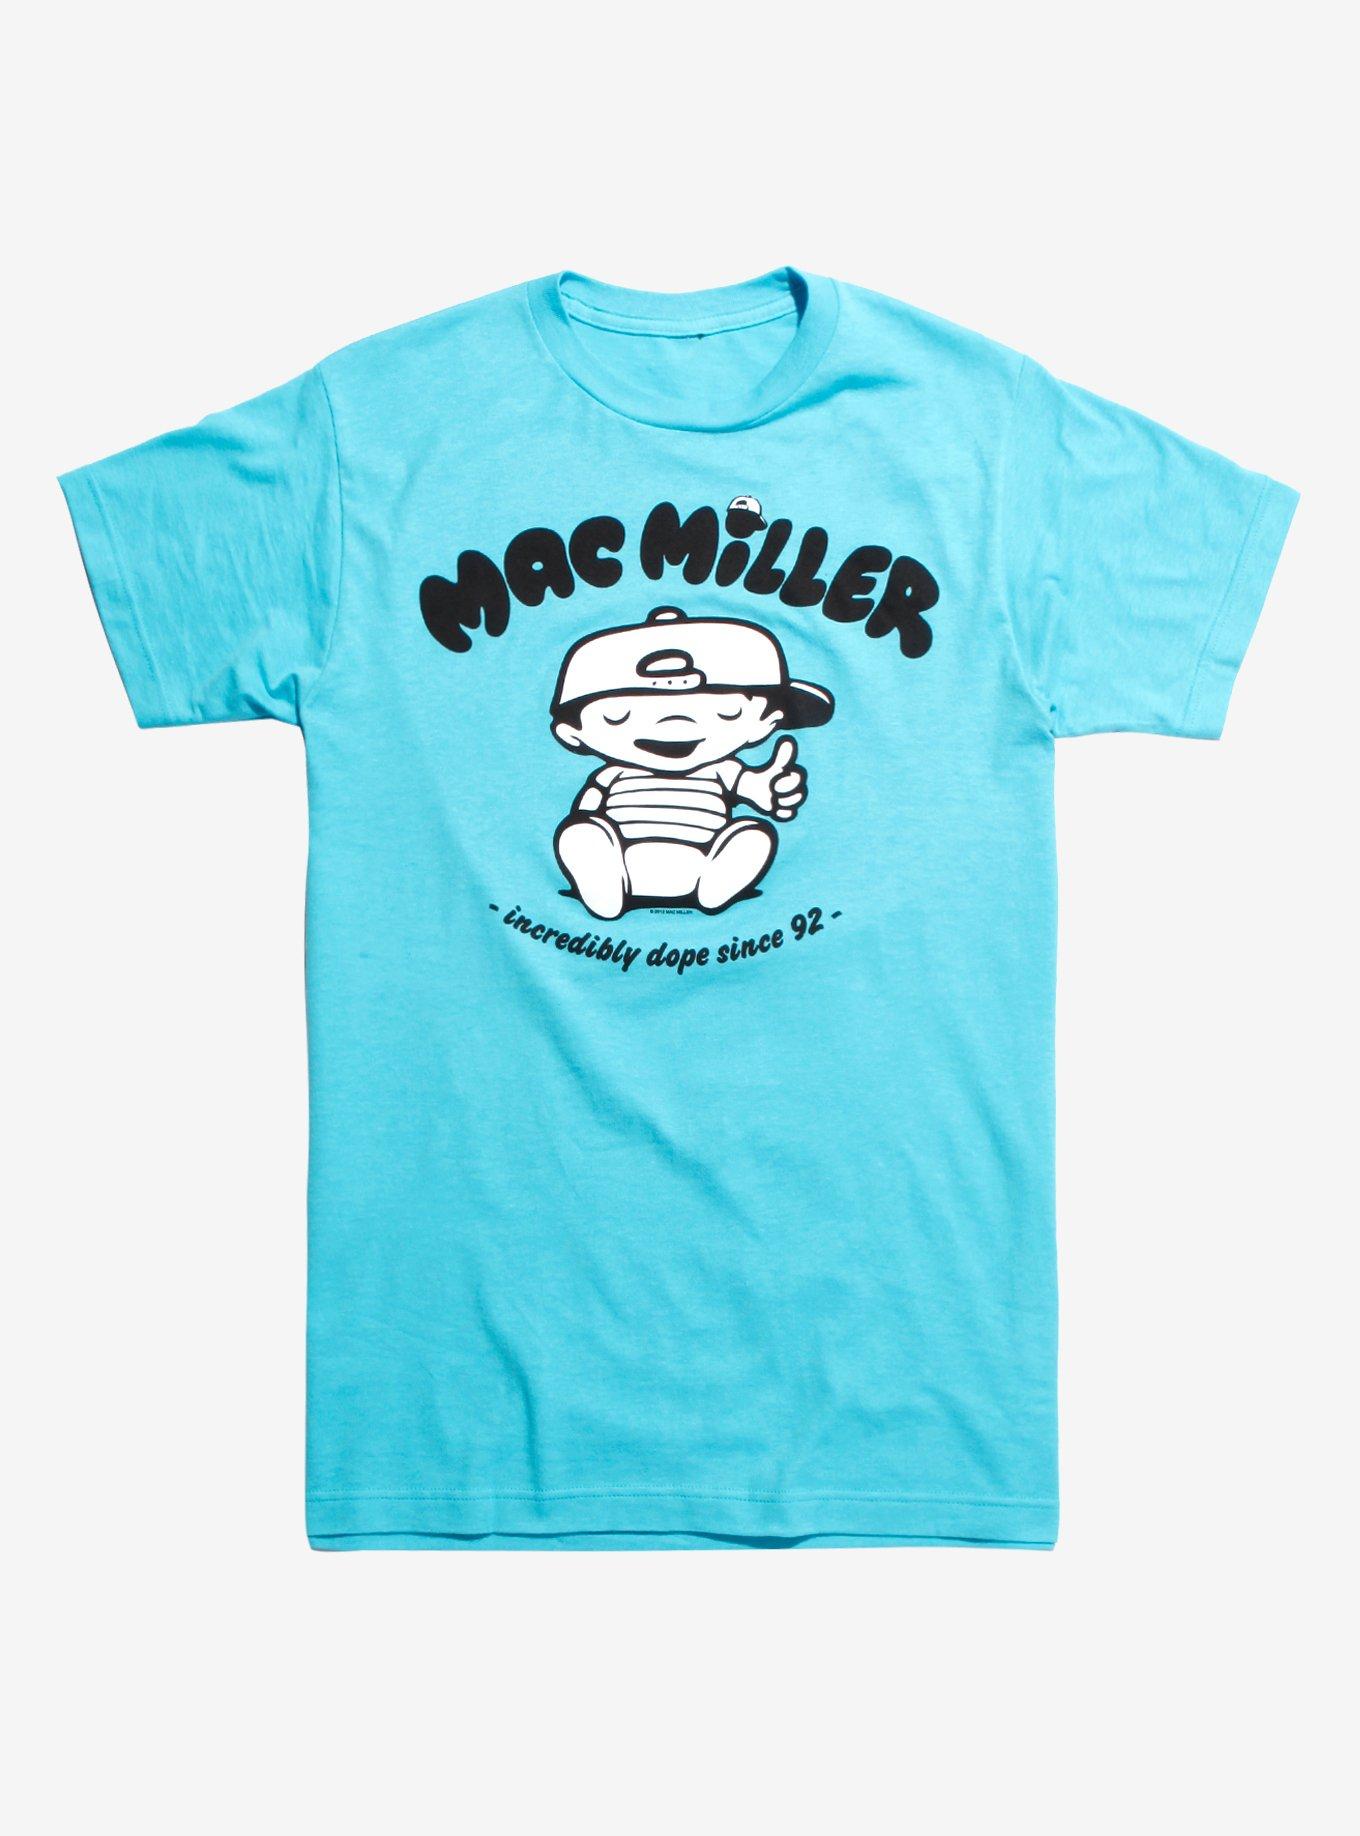 Mac Miller 1 Most Dope White Baseball Jersey 4